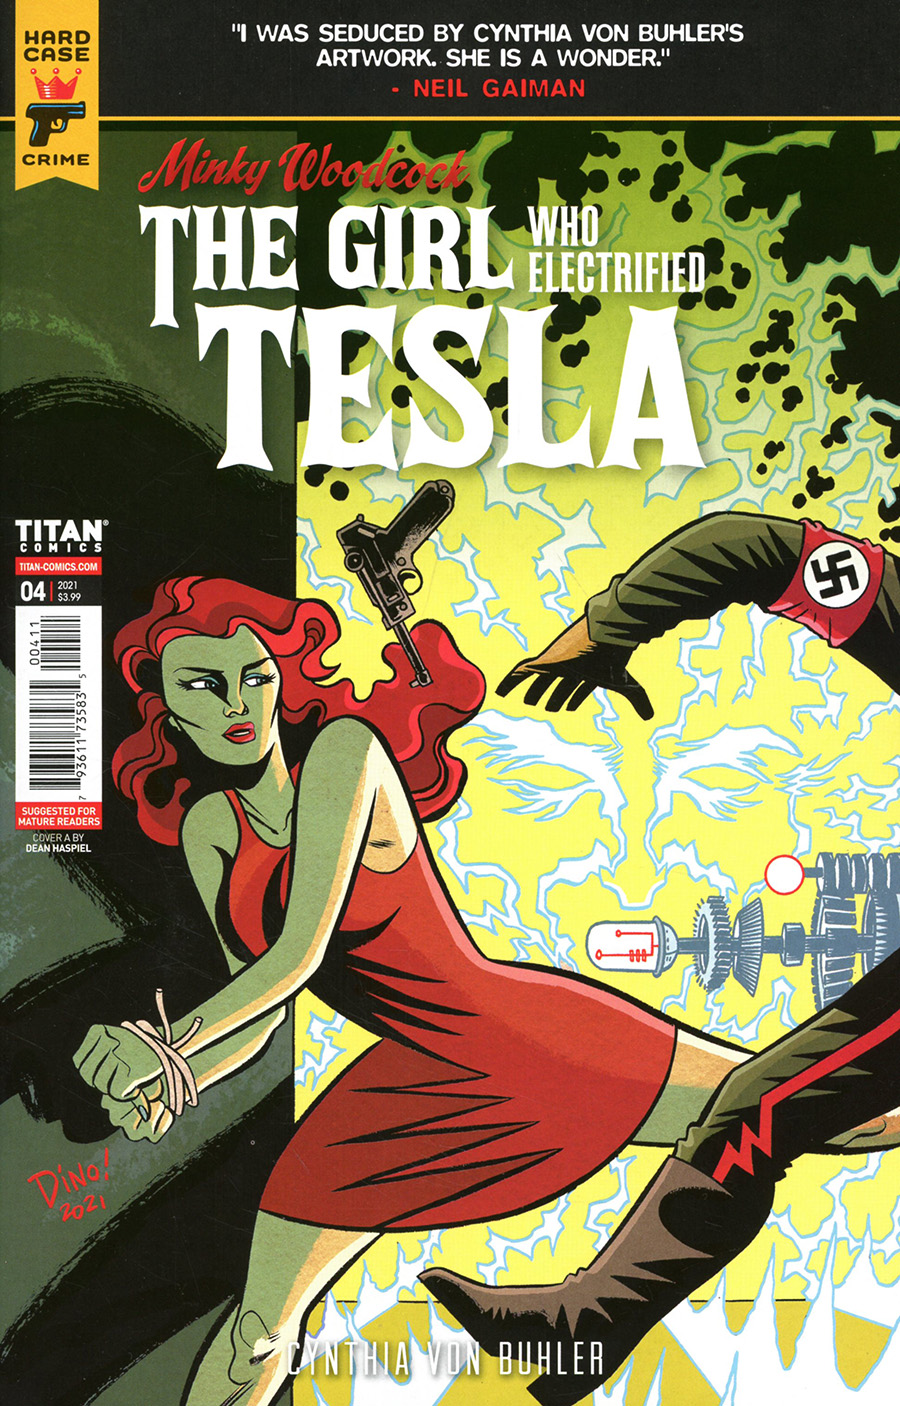 Hard Case Crime Minky Woodcock Girl Who Electrified Tesla #4 Cover A Regular Dean Haspiel Cover